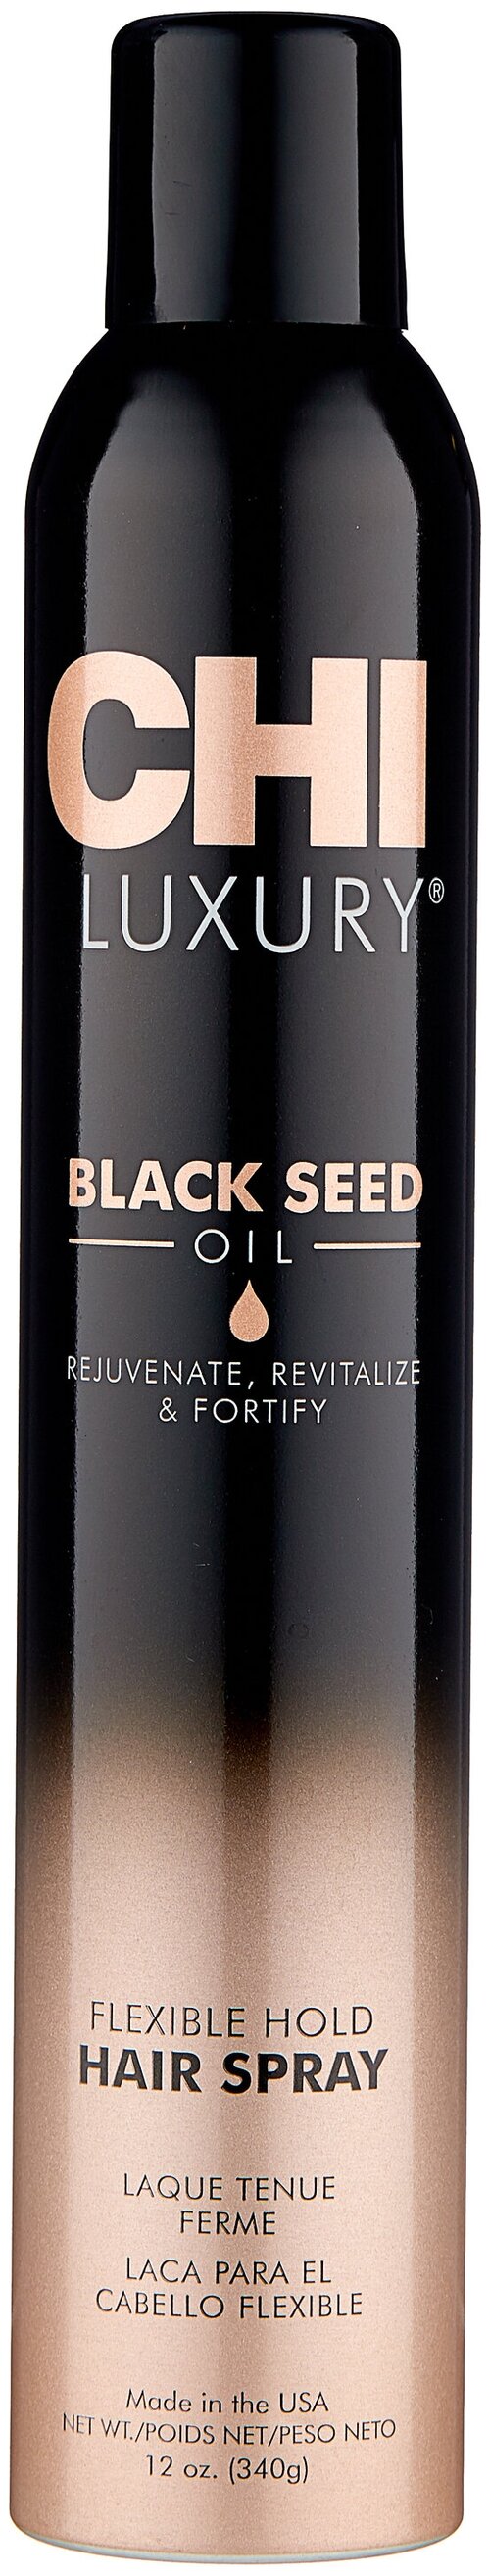 CHI Luxury Лак для волос Black seed oil Flexible hold, слабая фиксация, 340 мл